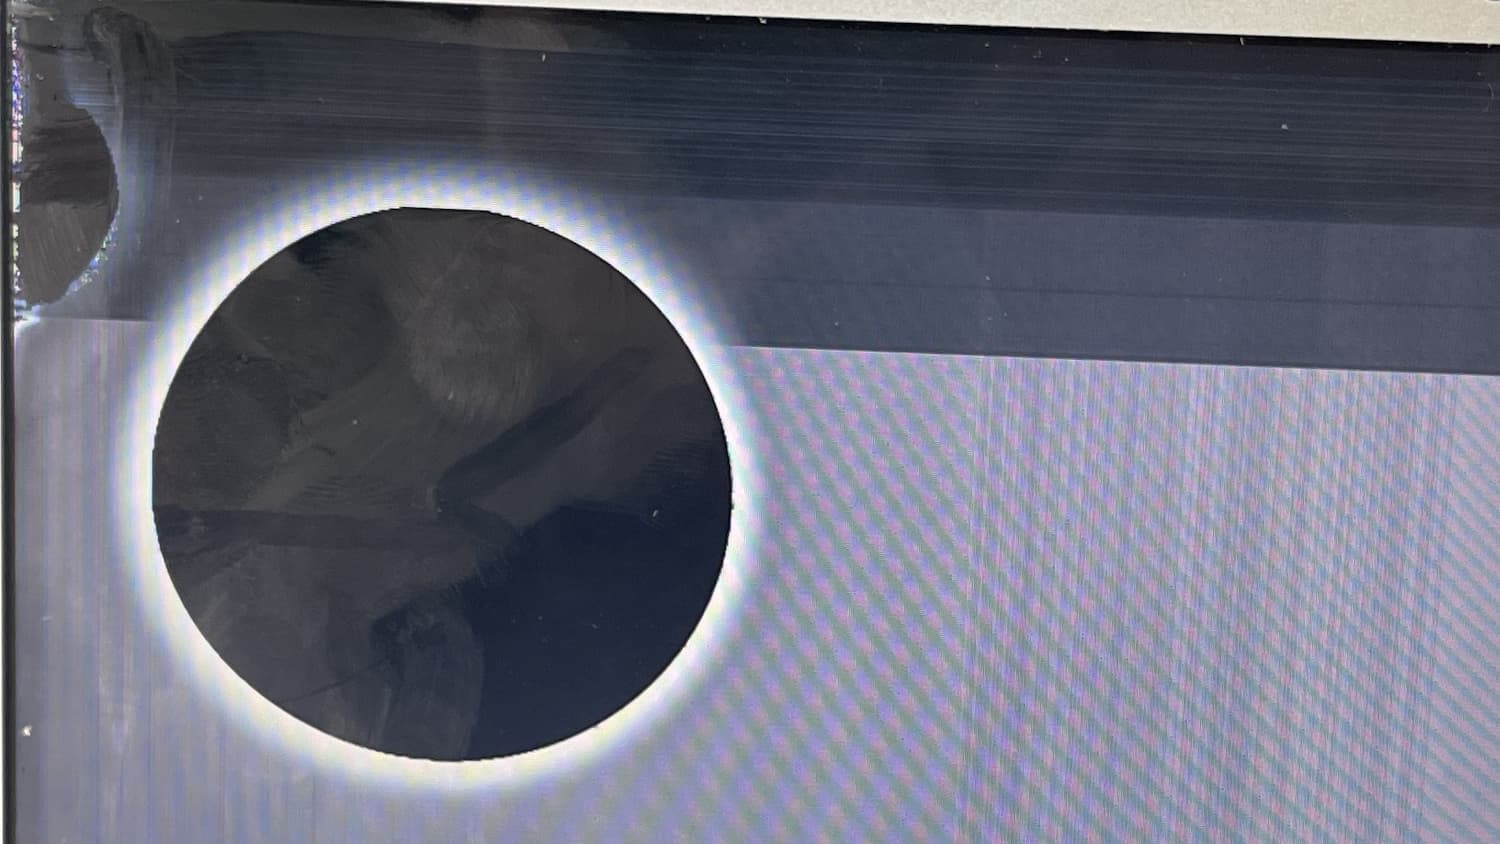 Closeup of 2015 MacBook Air With Black Circle On Screen